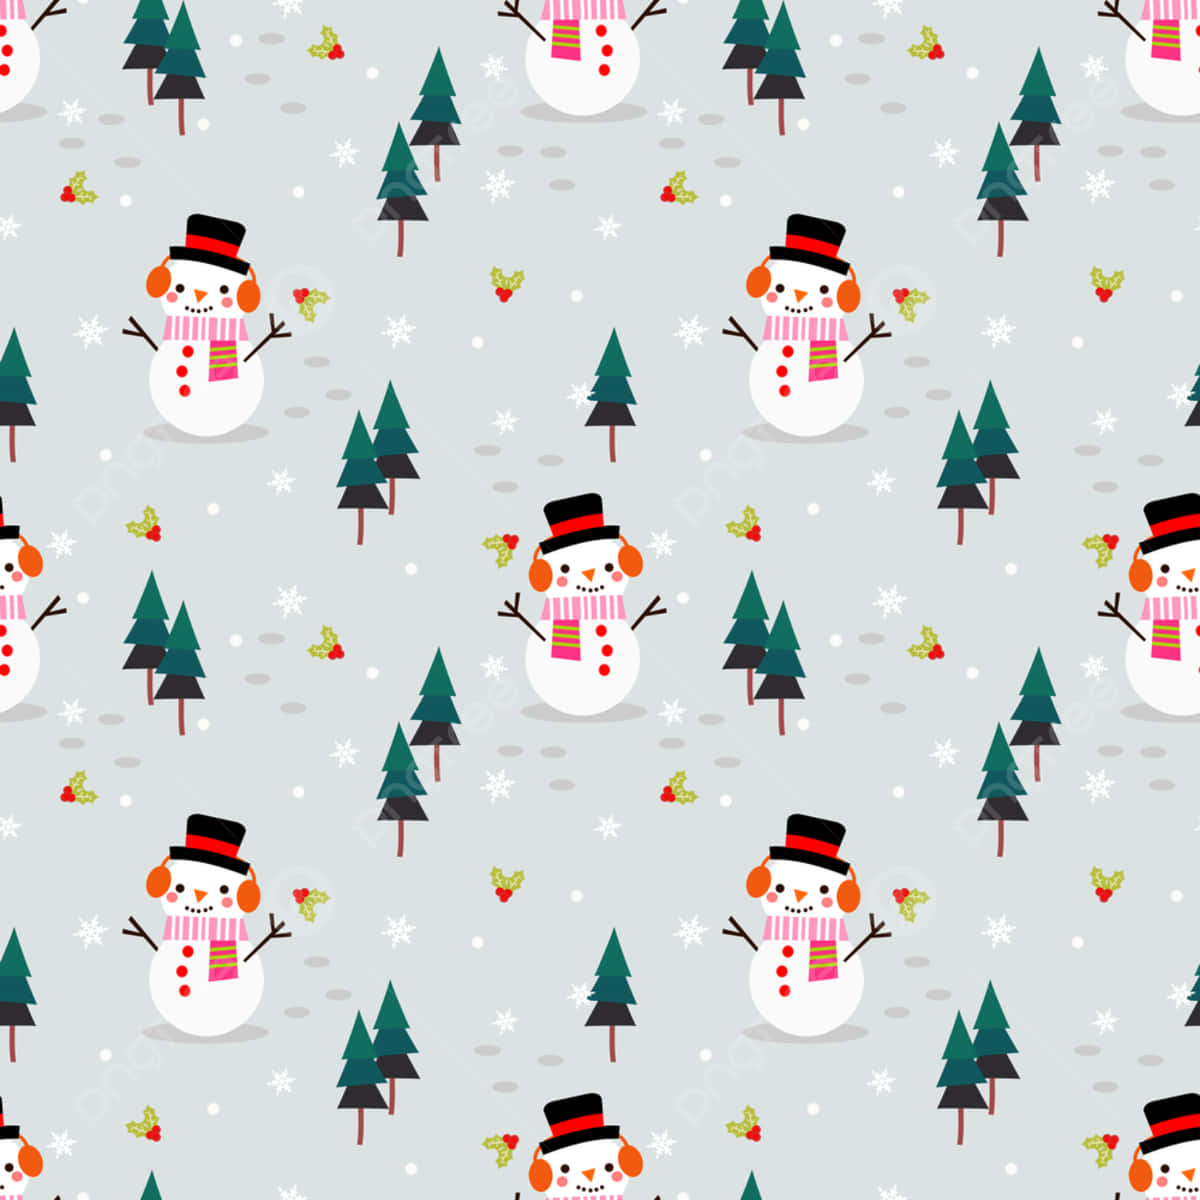 Snowman Winter Pattern.jpg Wallpaper